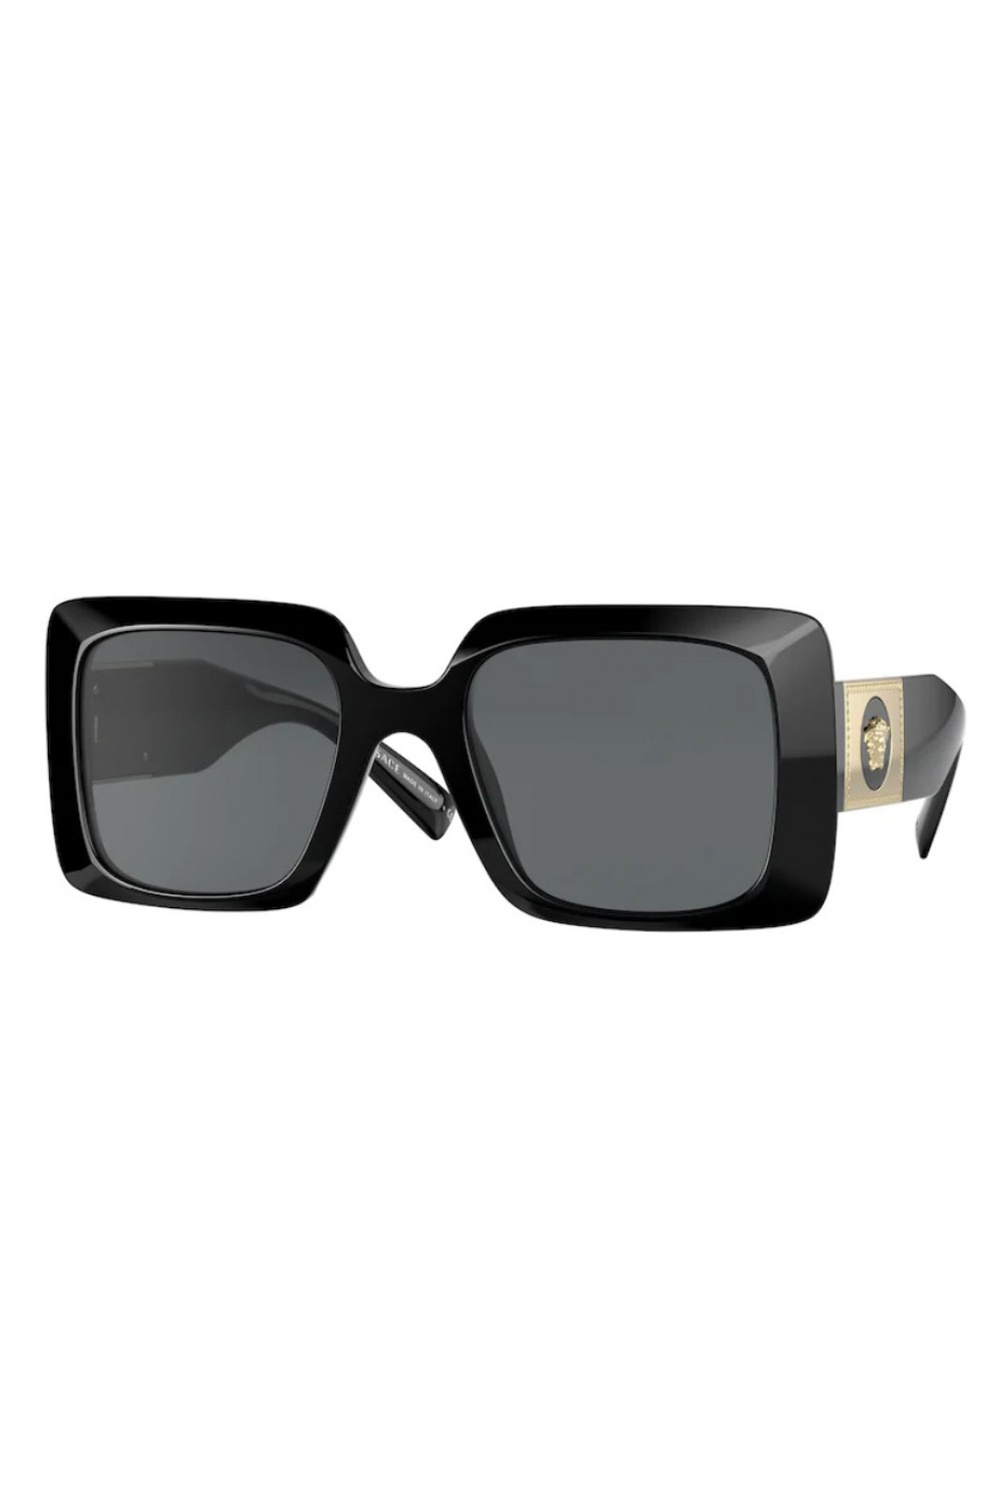 Versace Rectangular Women Sunglasses | Odel.lk